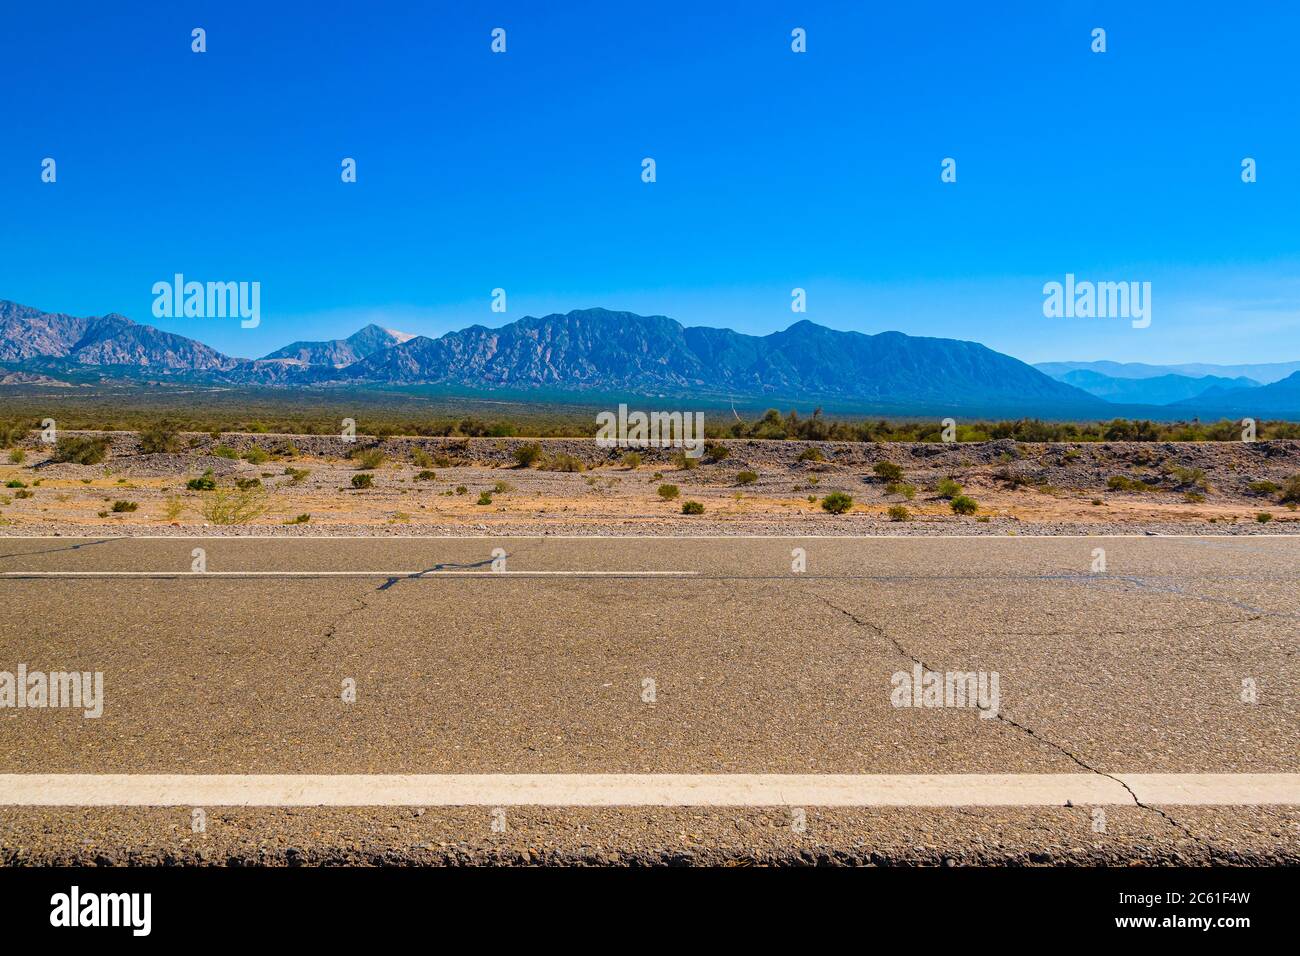 Empty highway at arid landscape environment, san juan province, argentina Stock Photo